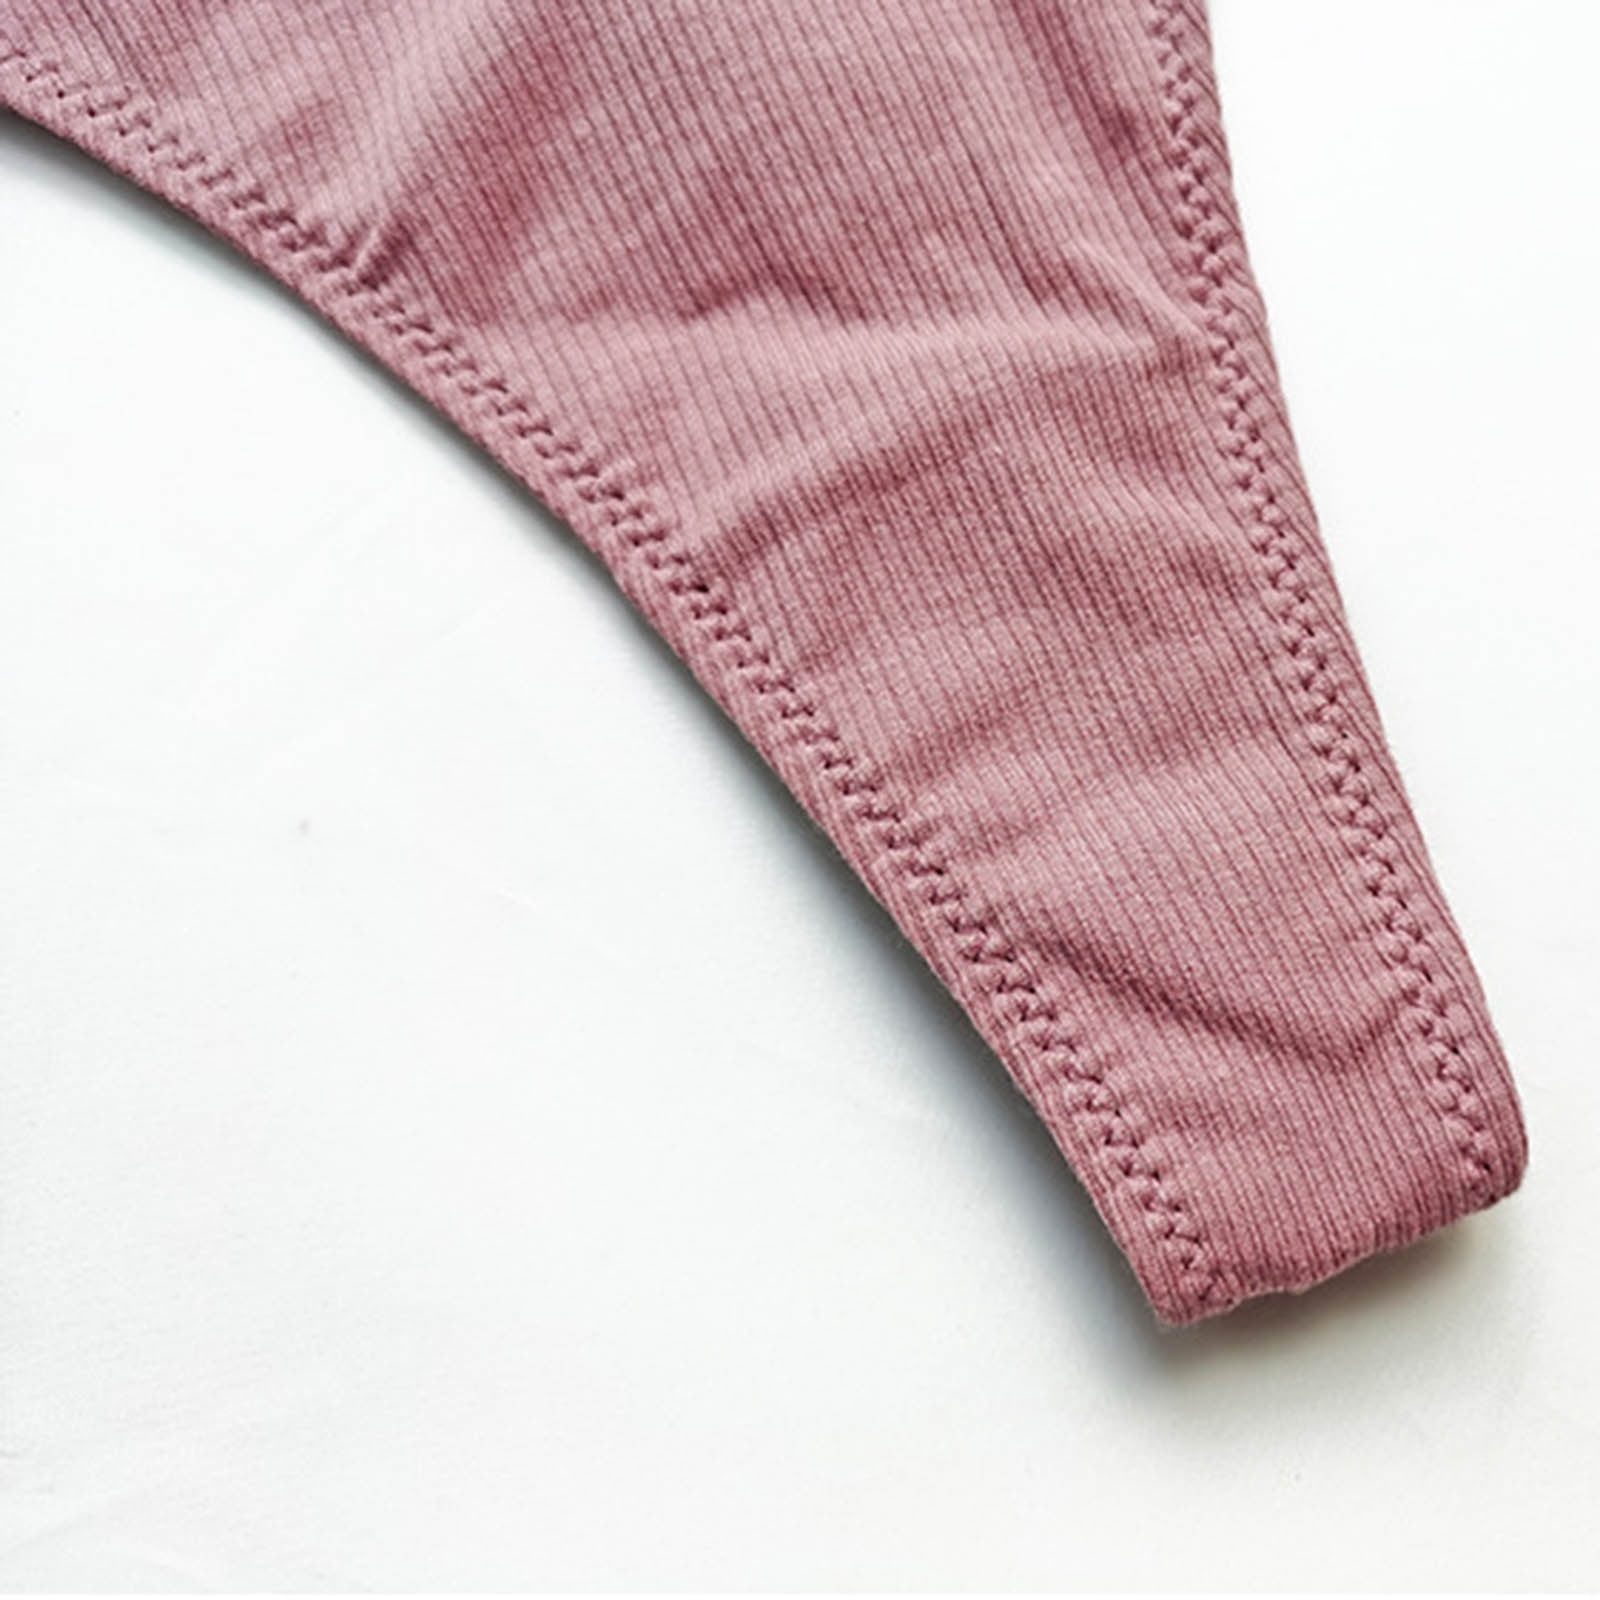 MRULIC panties for women Womens Solid Underwear V String Thong